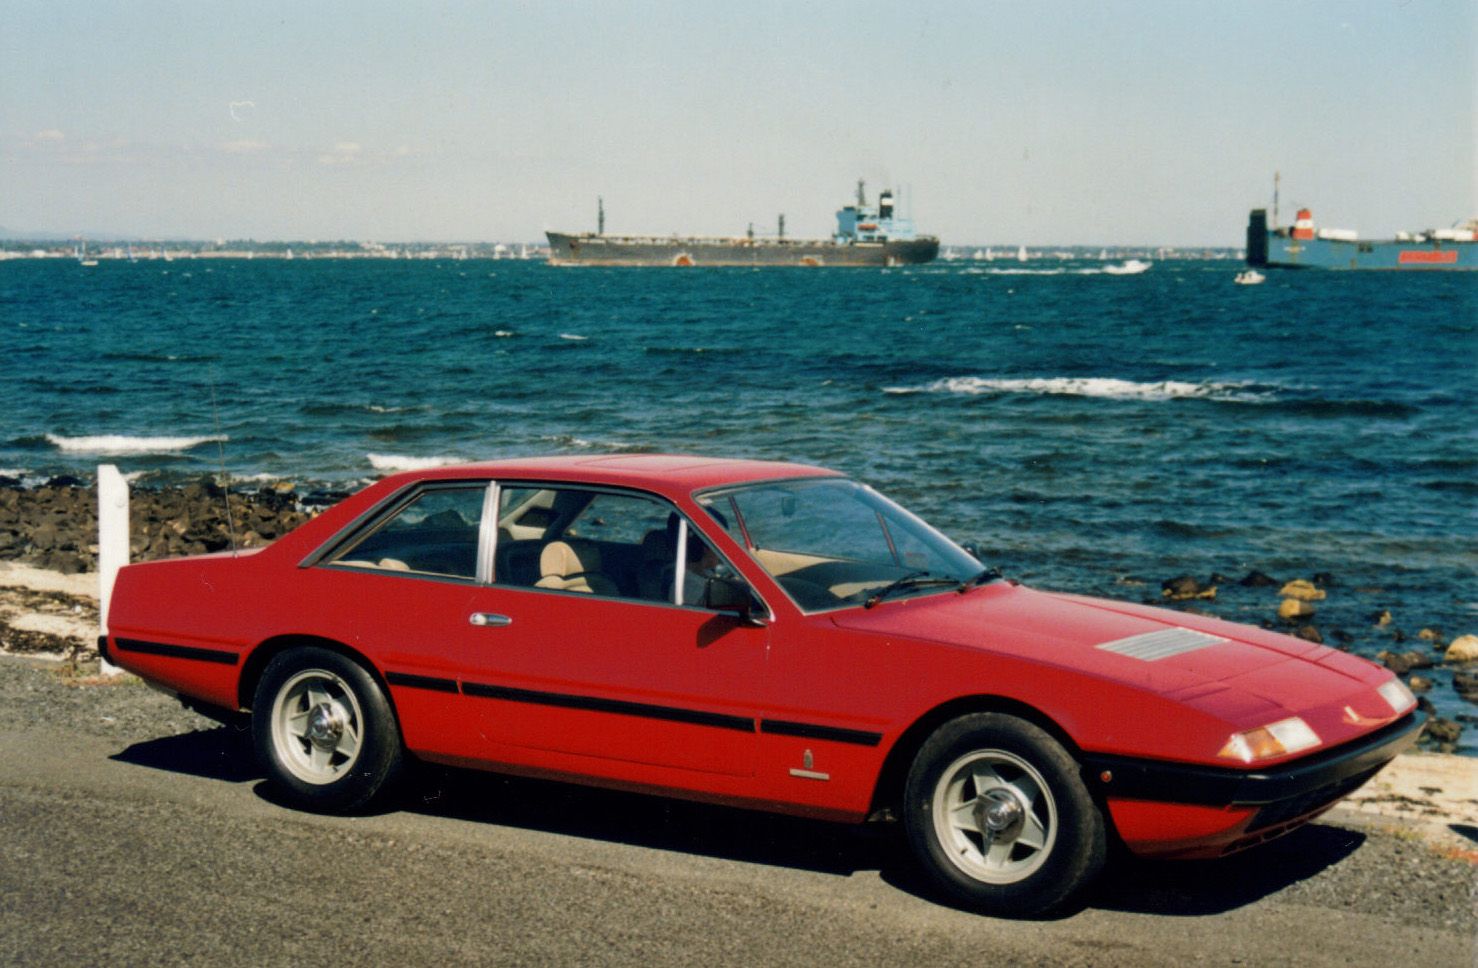 1972 - 1976 Ferrari 365 GT4 2+2